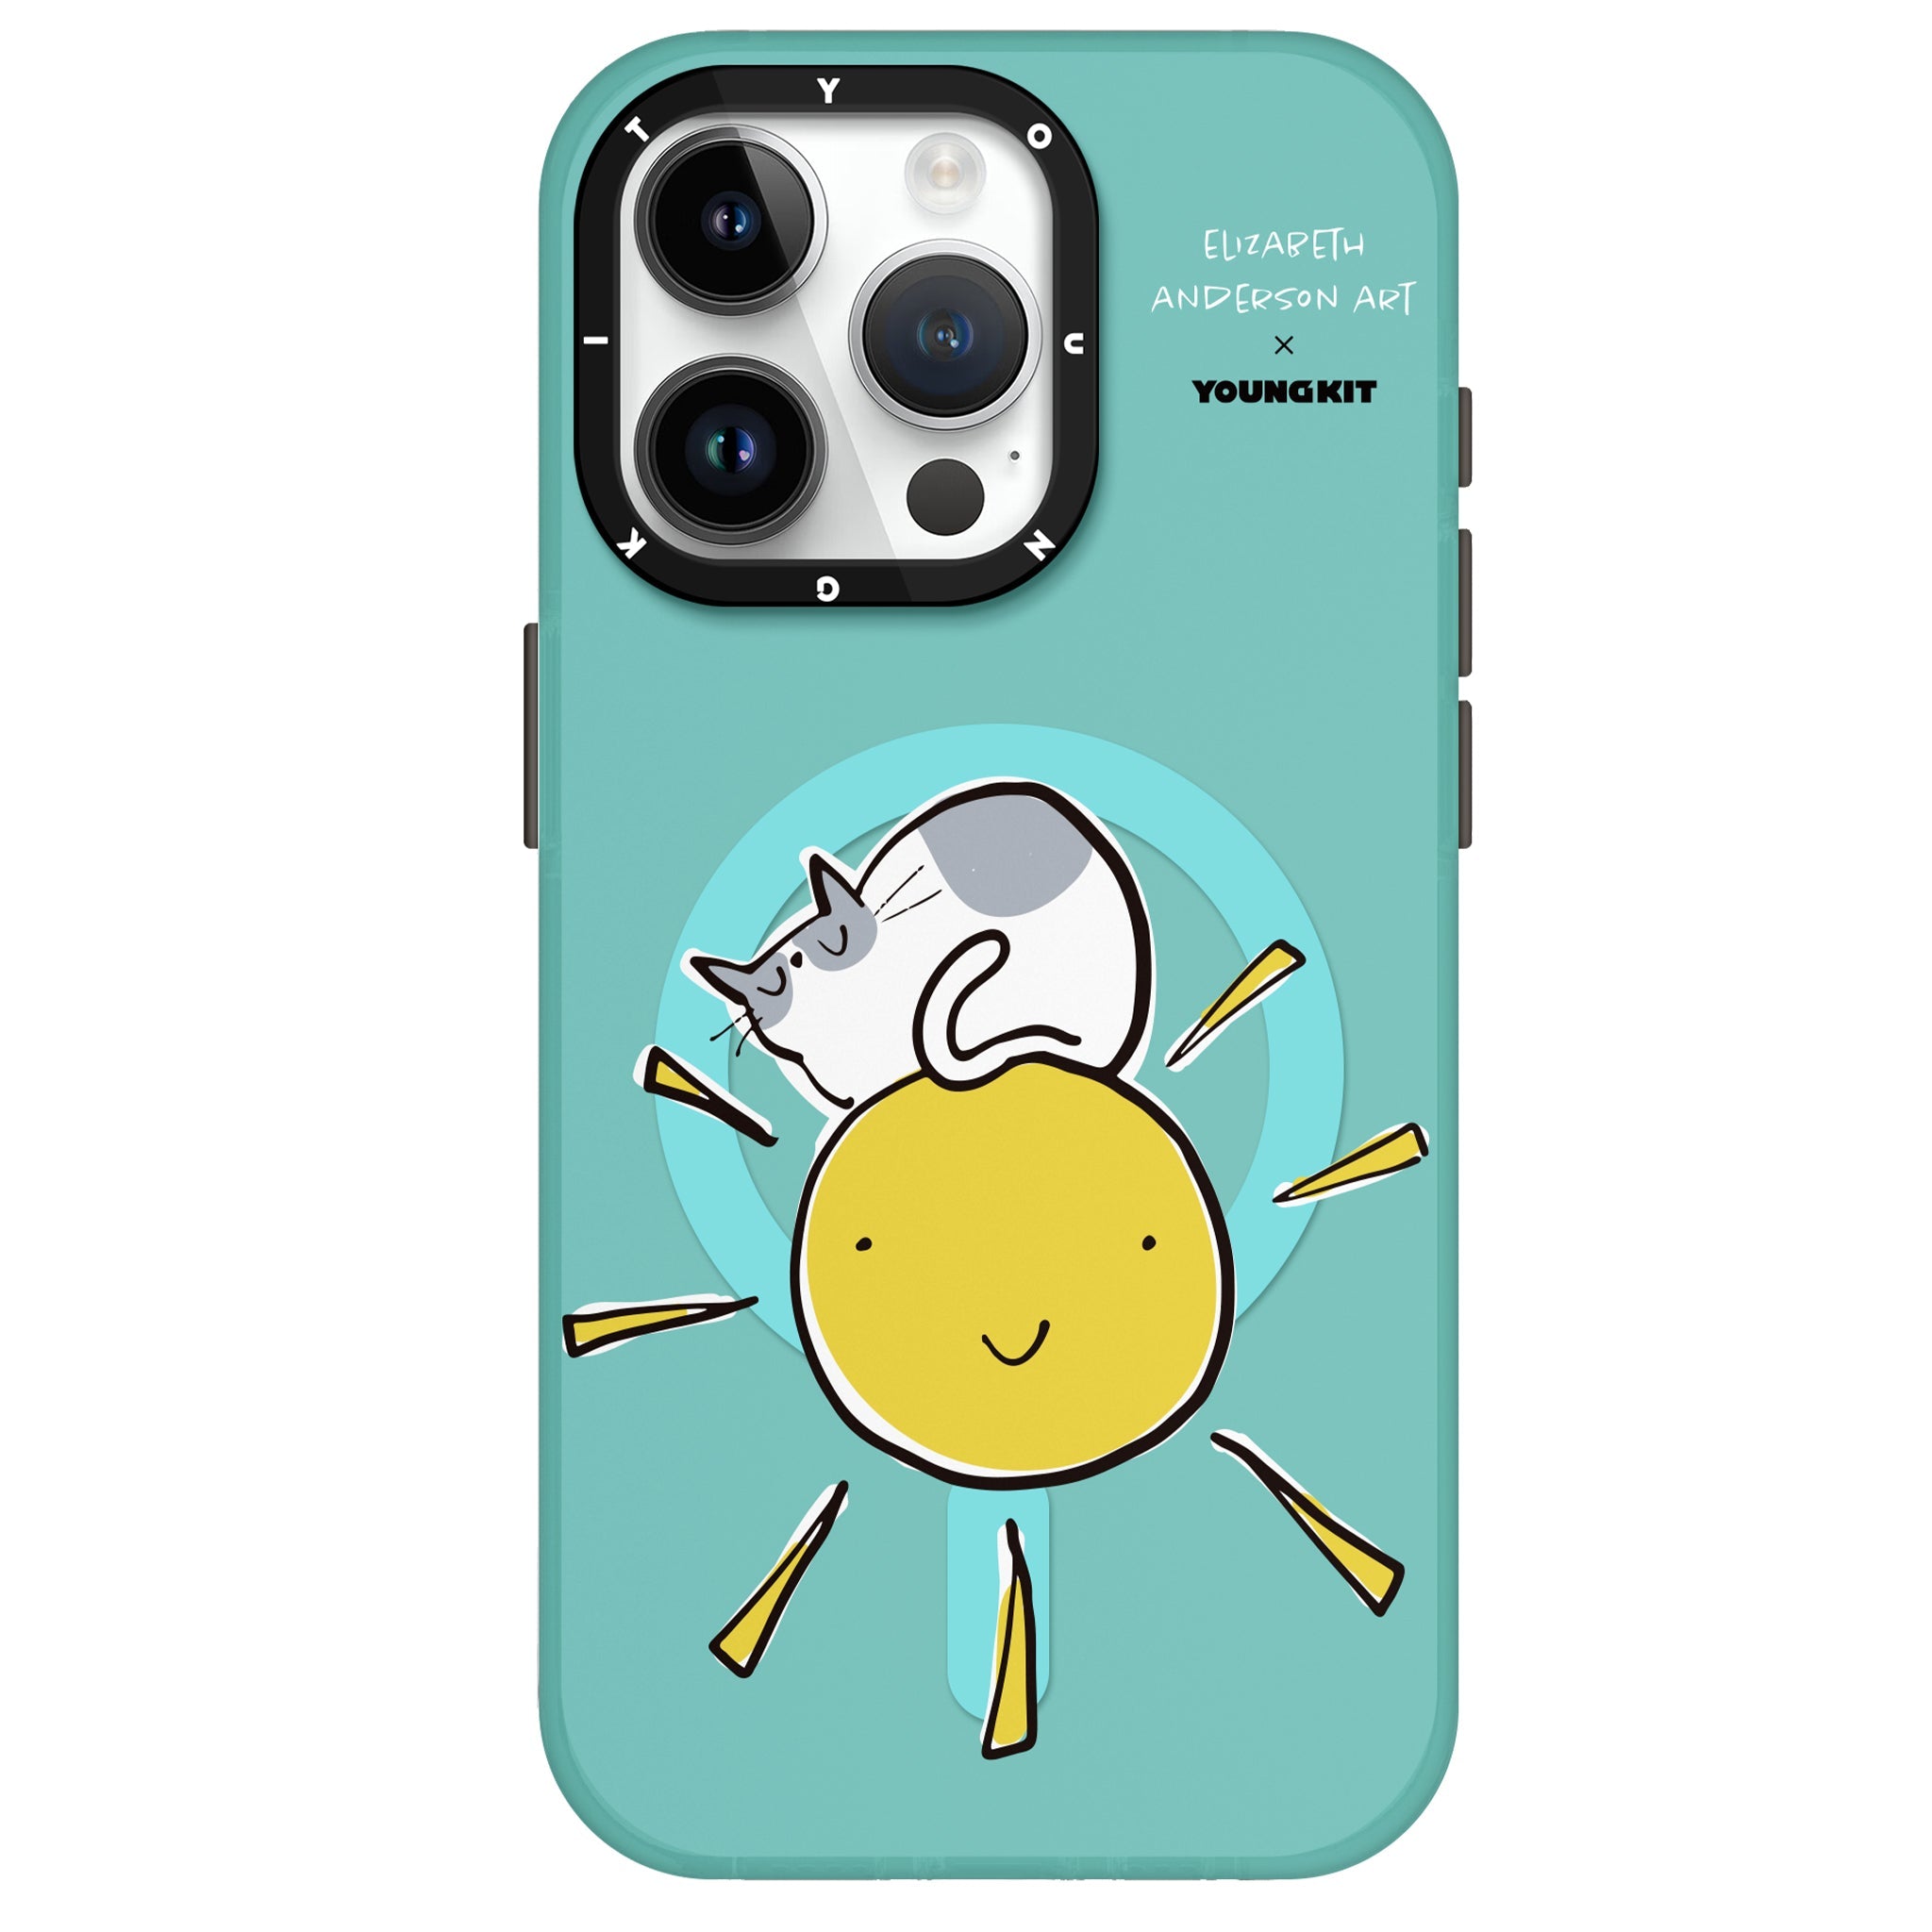 YOUNGKIT X Elizabeth Anderson Art MagSafe iPhone15 Case-Sunshine